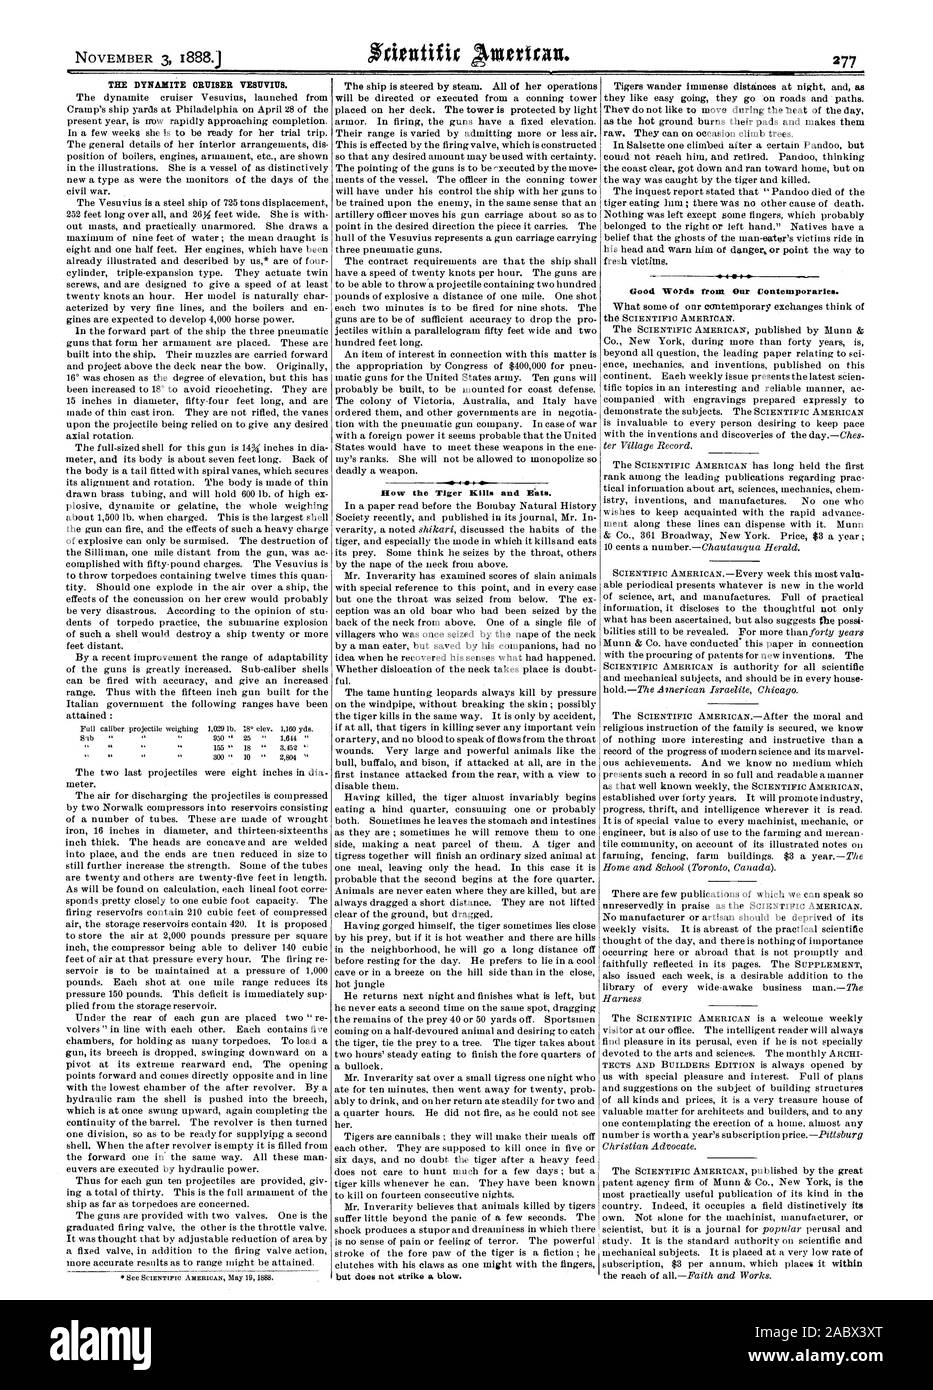 THE DYNAMITE CRUISER VESUVIUS. 41 41 44 Good WOrds front Our Contemporaries., scientific american, 1888-11-03 Stock Photo